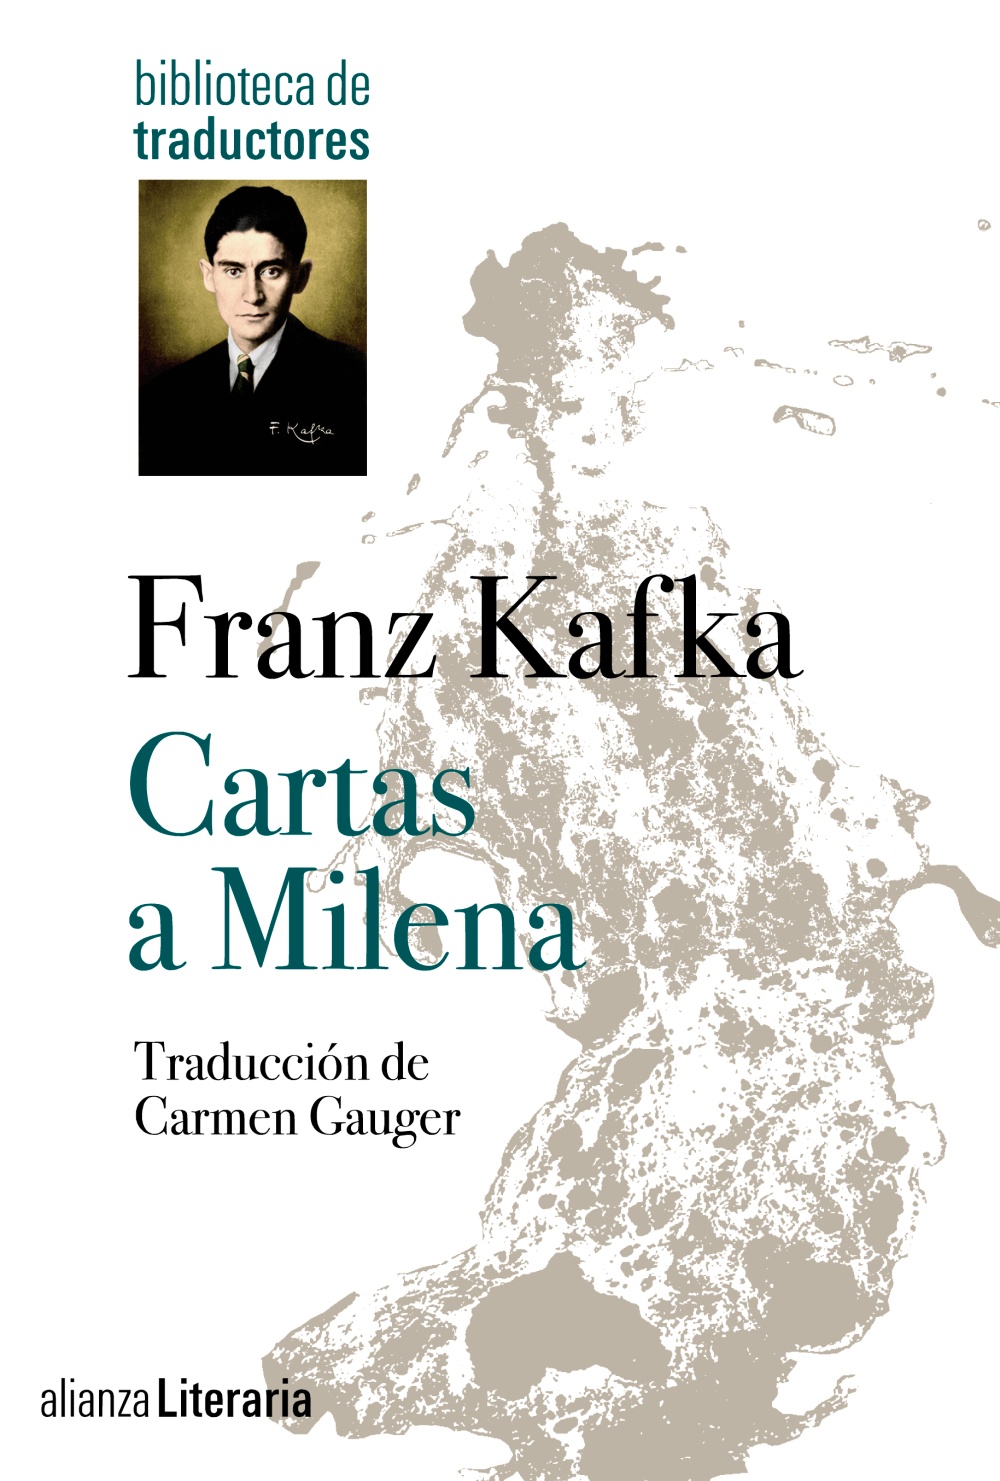 Portada del libro «Cartas a Milena», de Franz Kafka